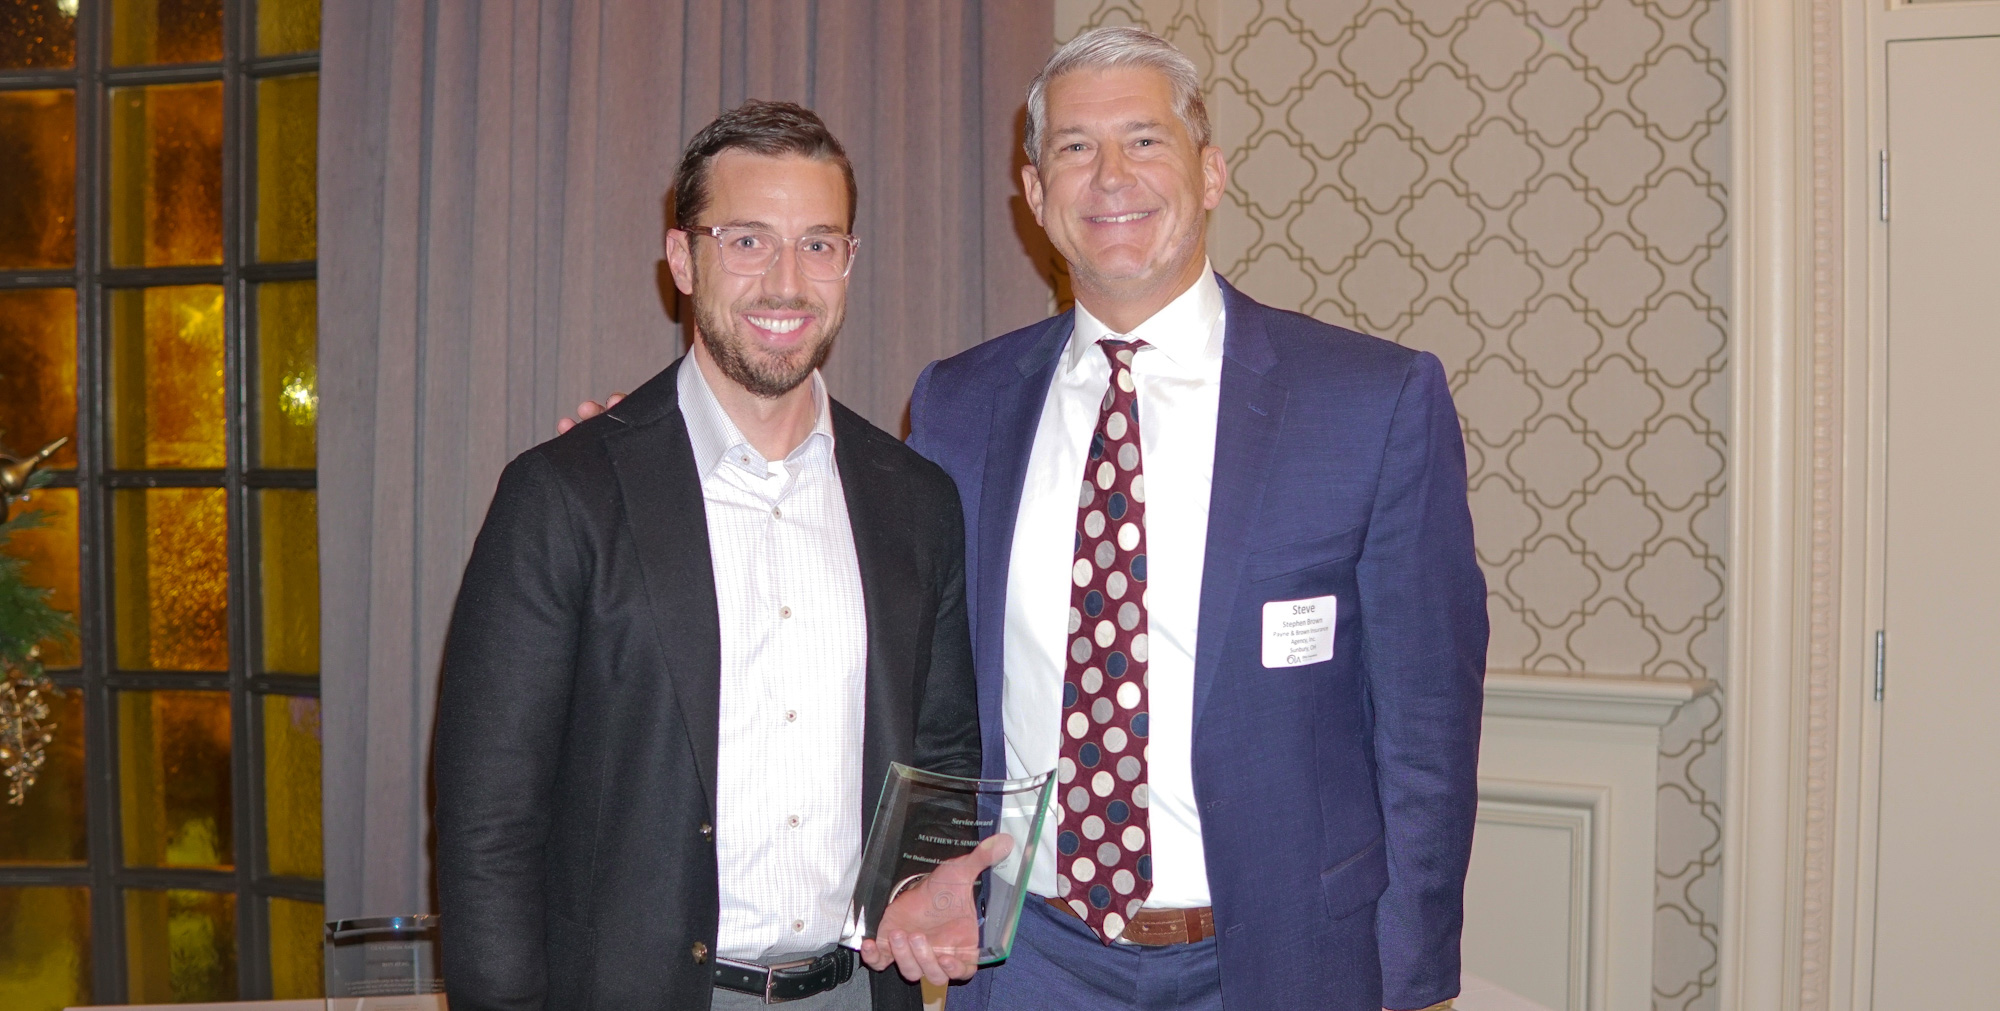 OIA honors Matt Simon with Board Service Award